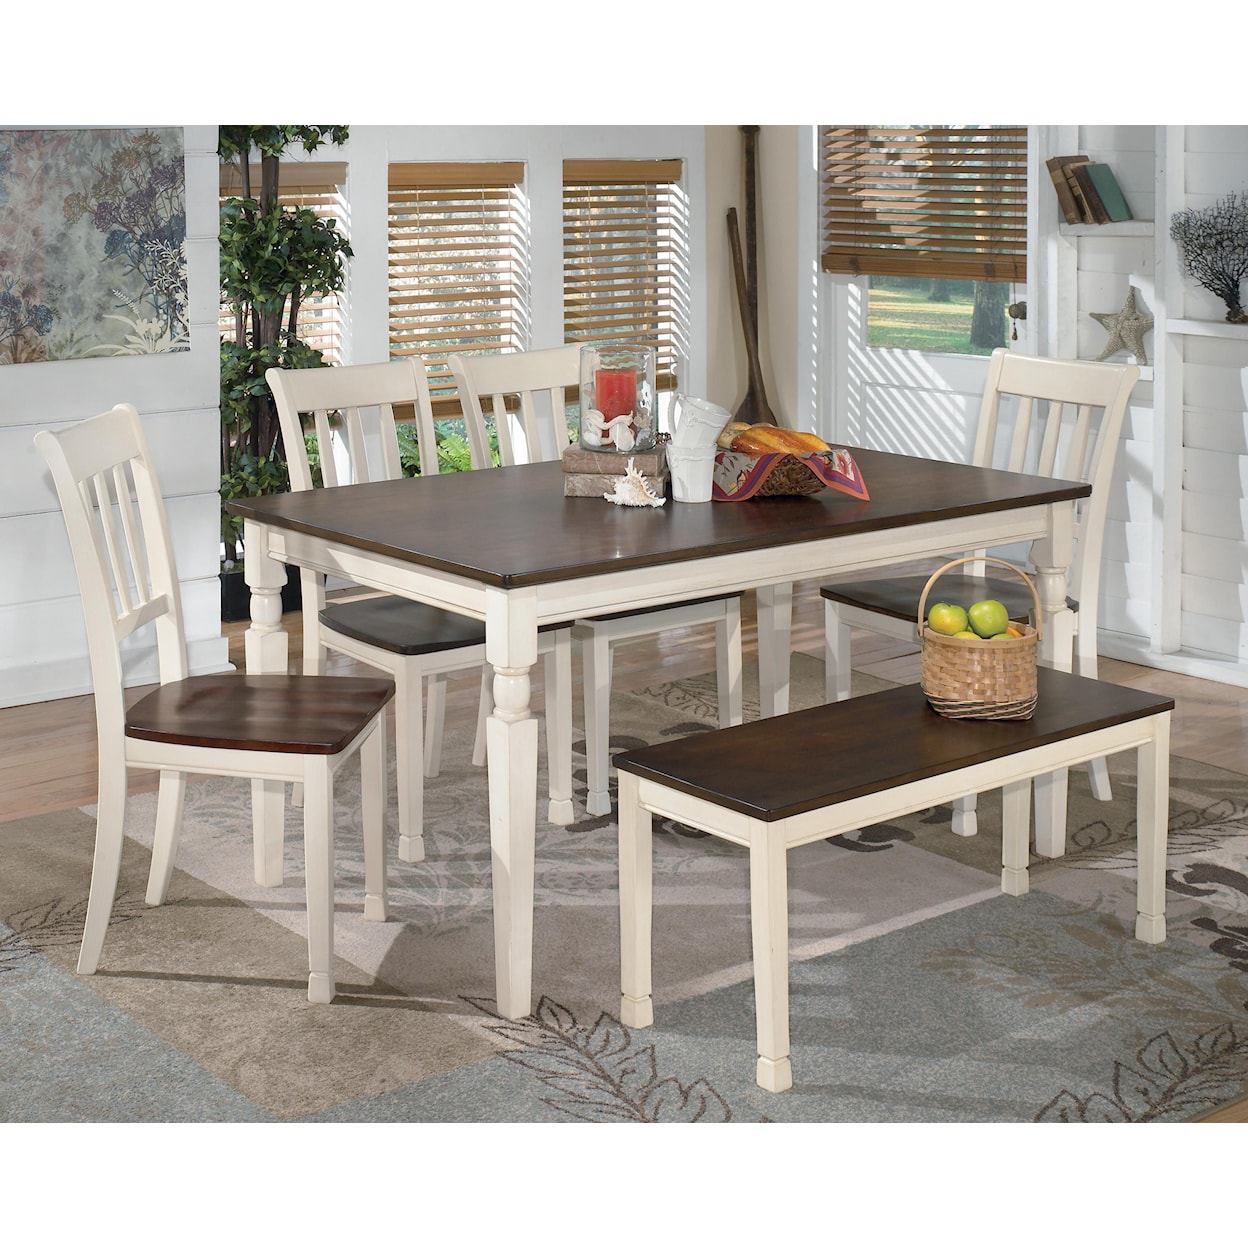 Ashley Furniture Signature Design Whitesburg 6-Piece Rectangular Table Set with Bench